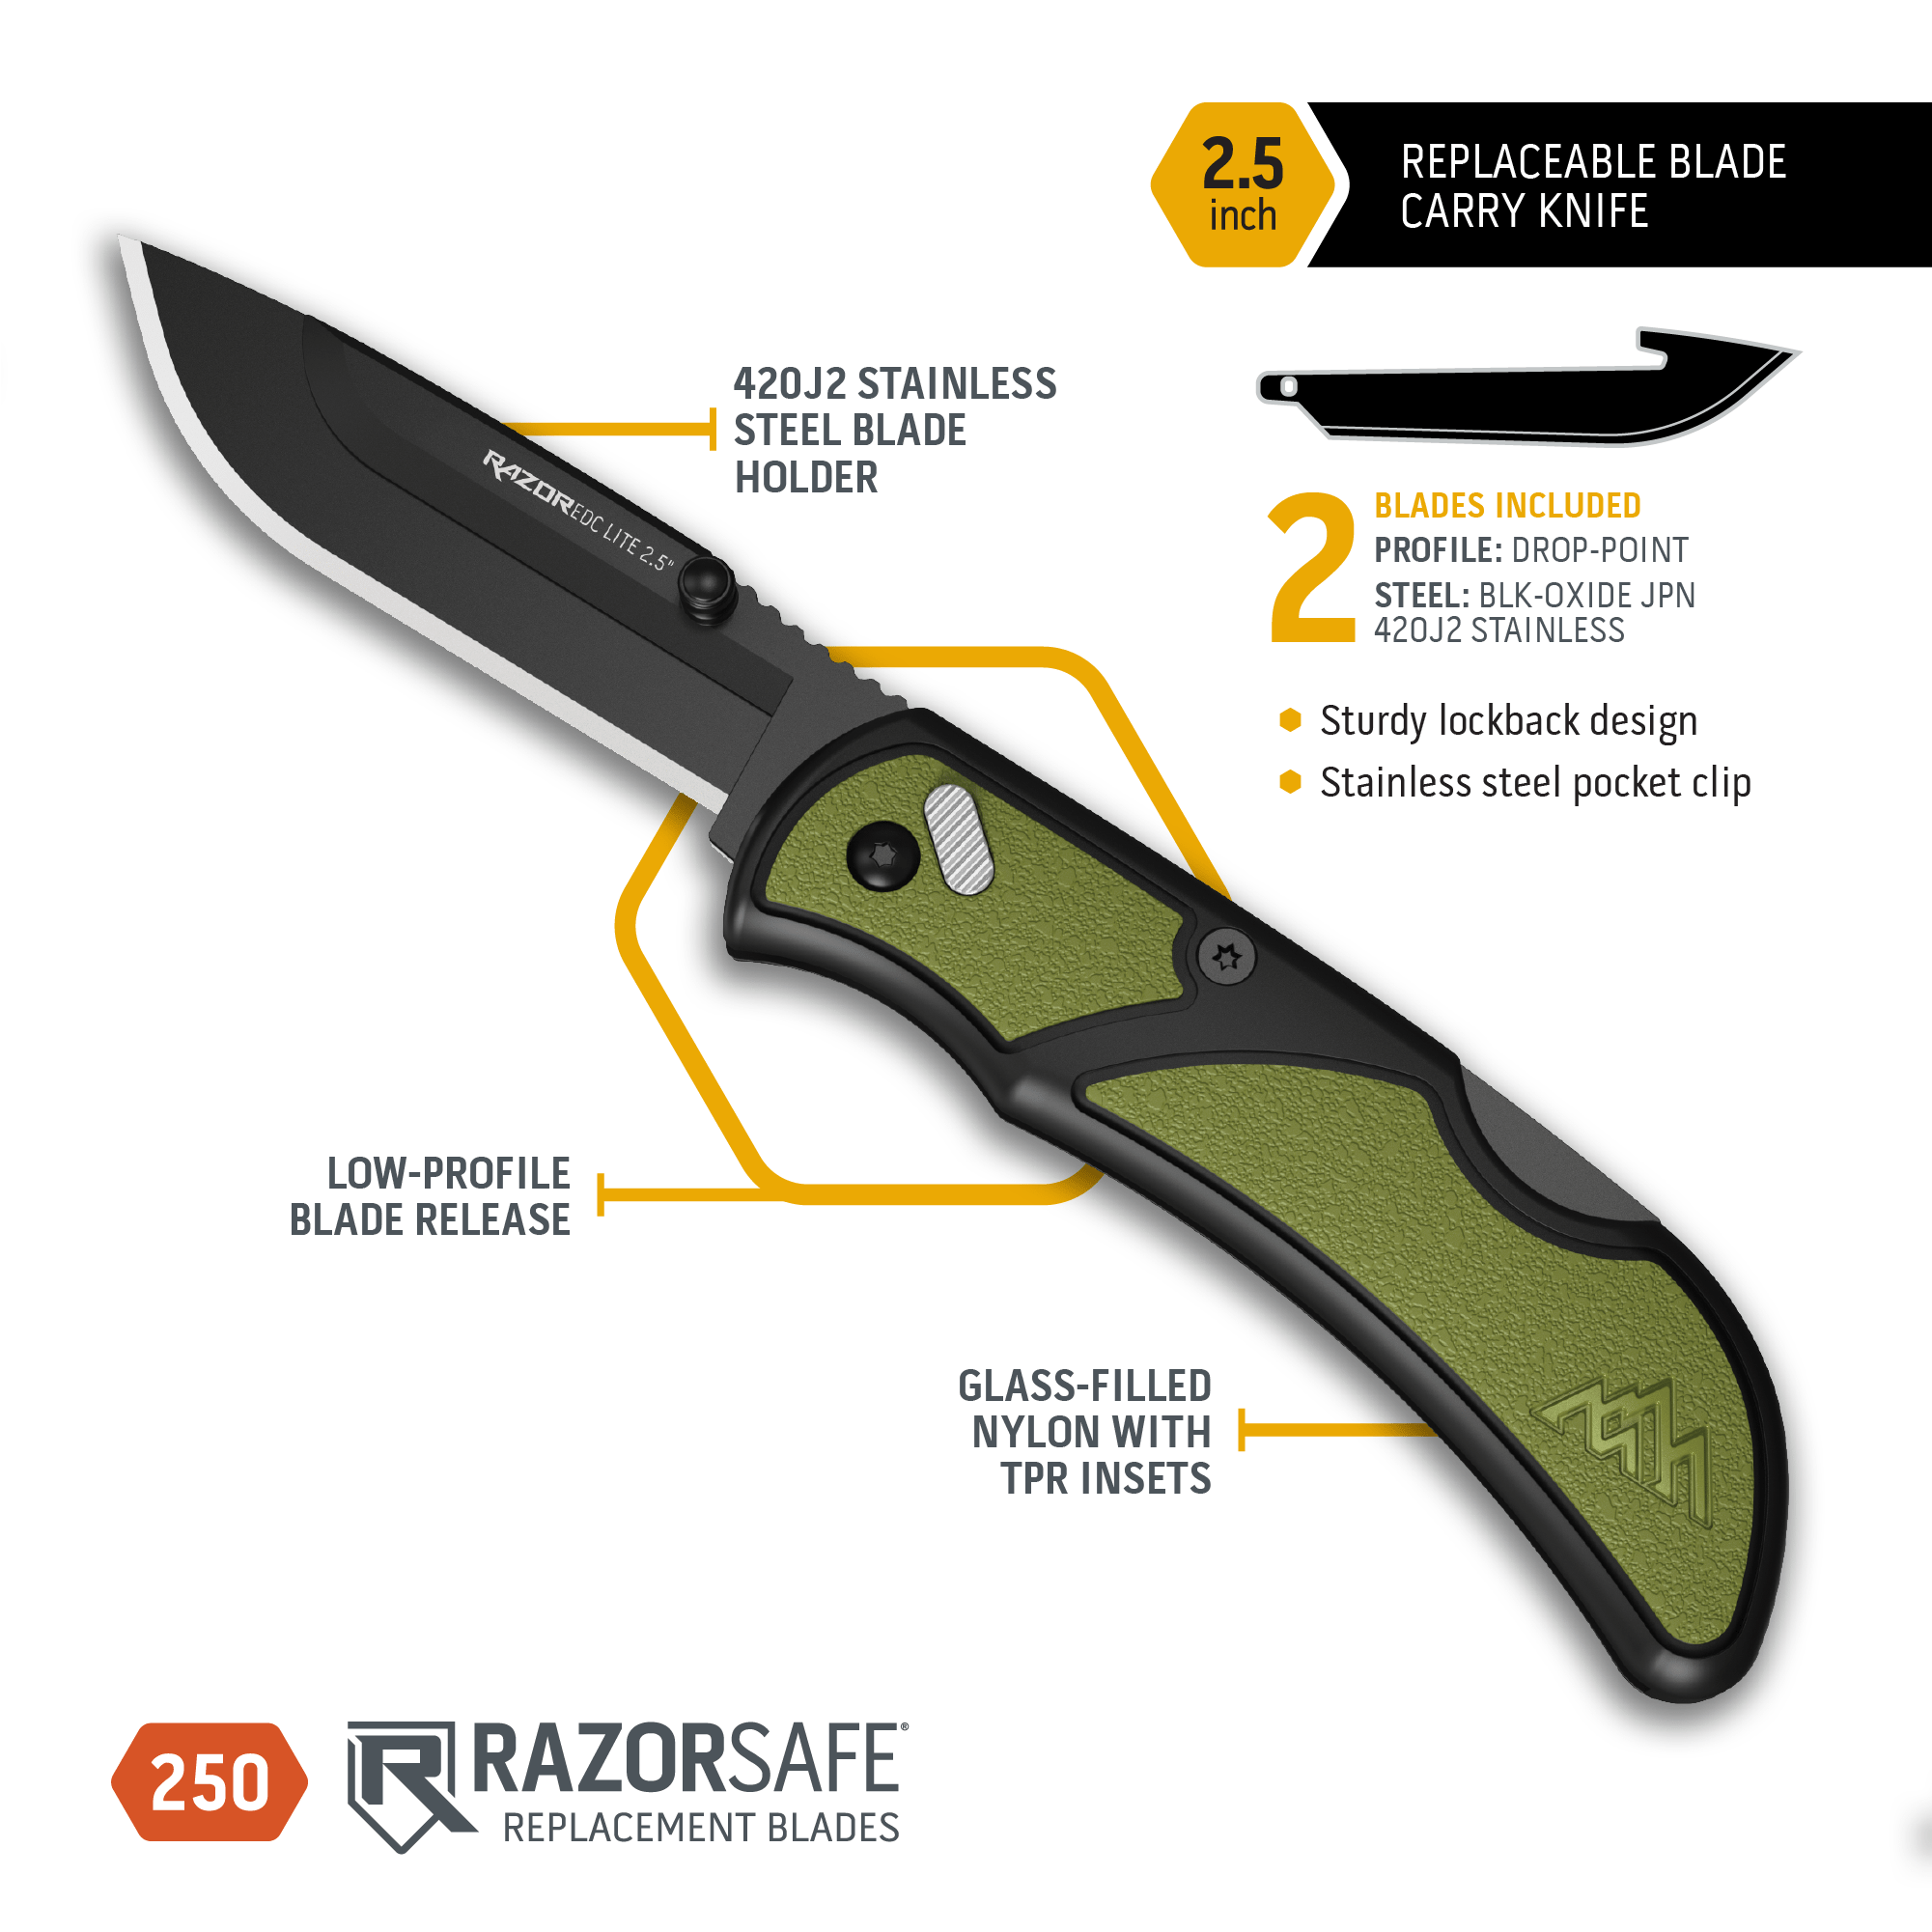 RazorSafe Replacement Blades